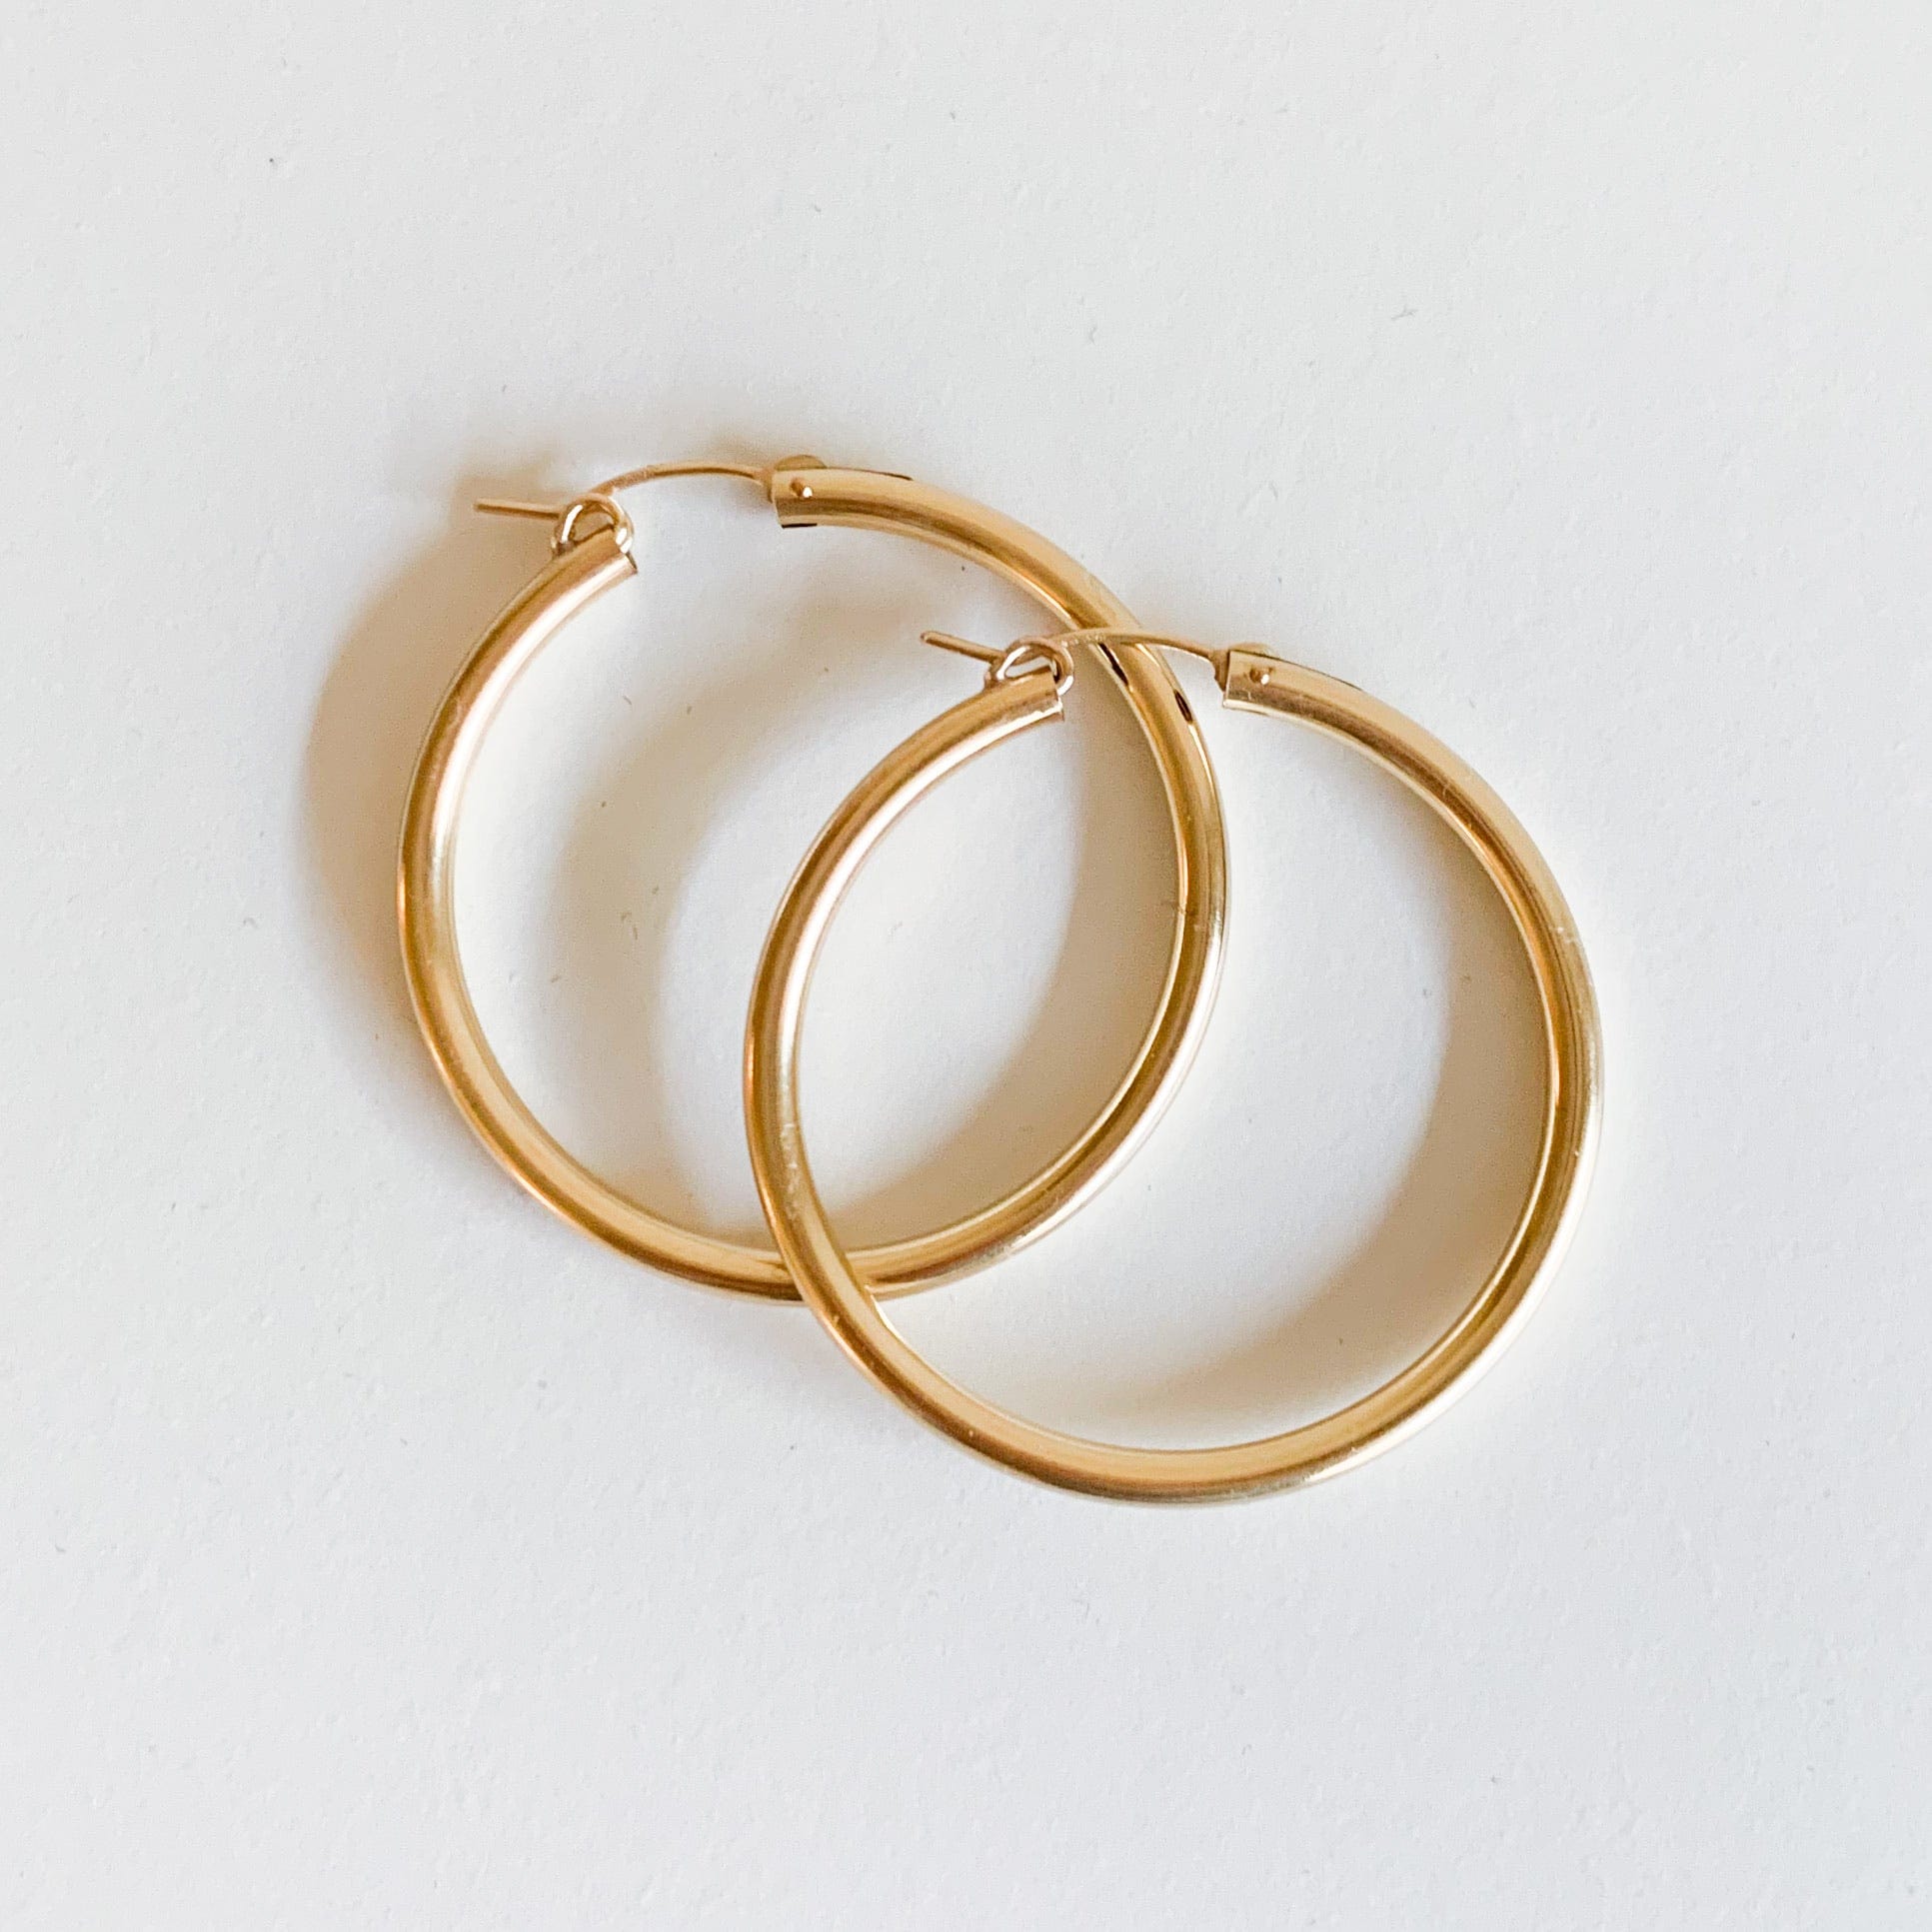 Gold Hoop Earrings 18mm Gold Filled Hoops Small Gold Hoop Earring